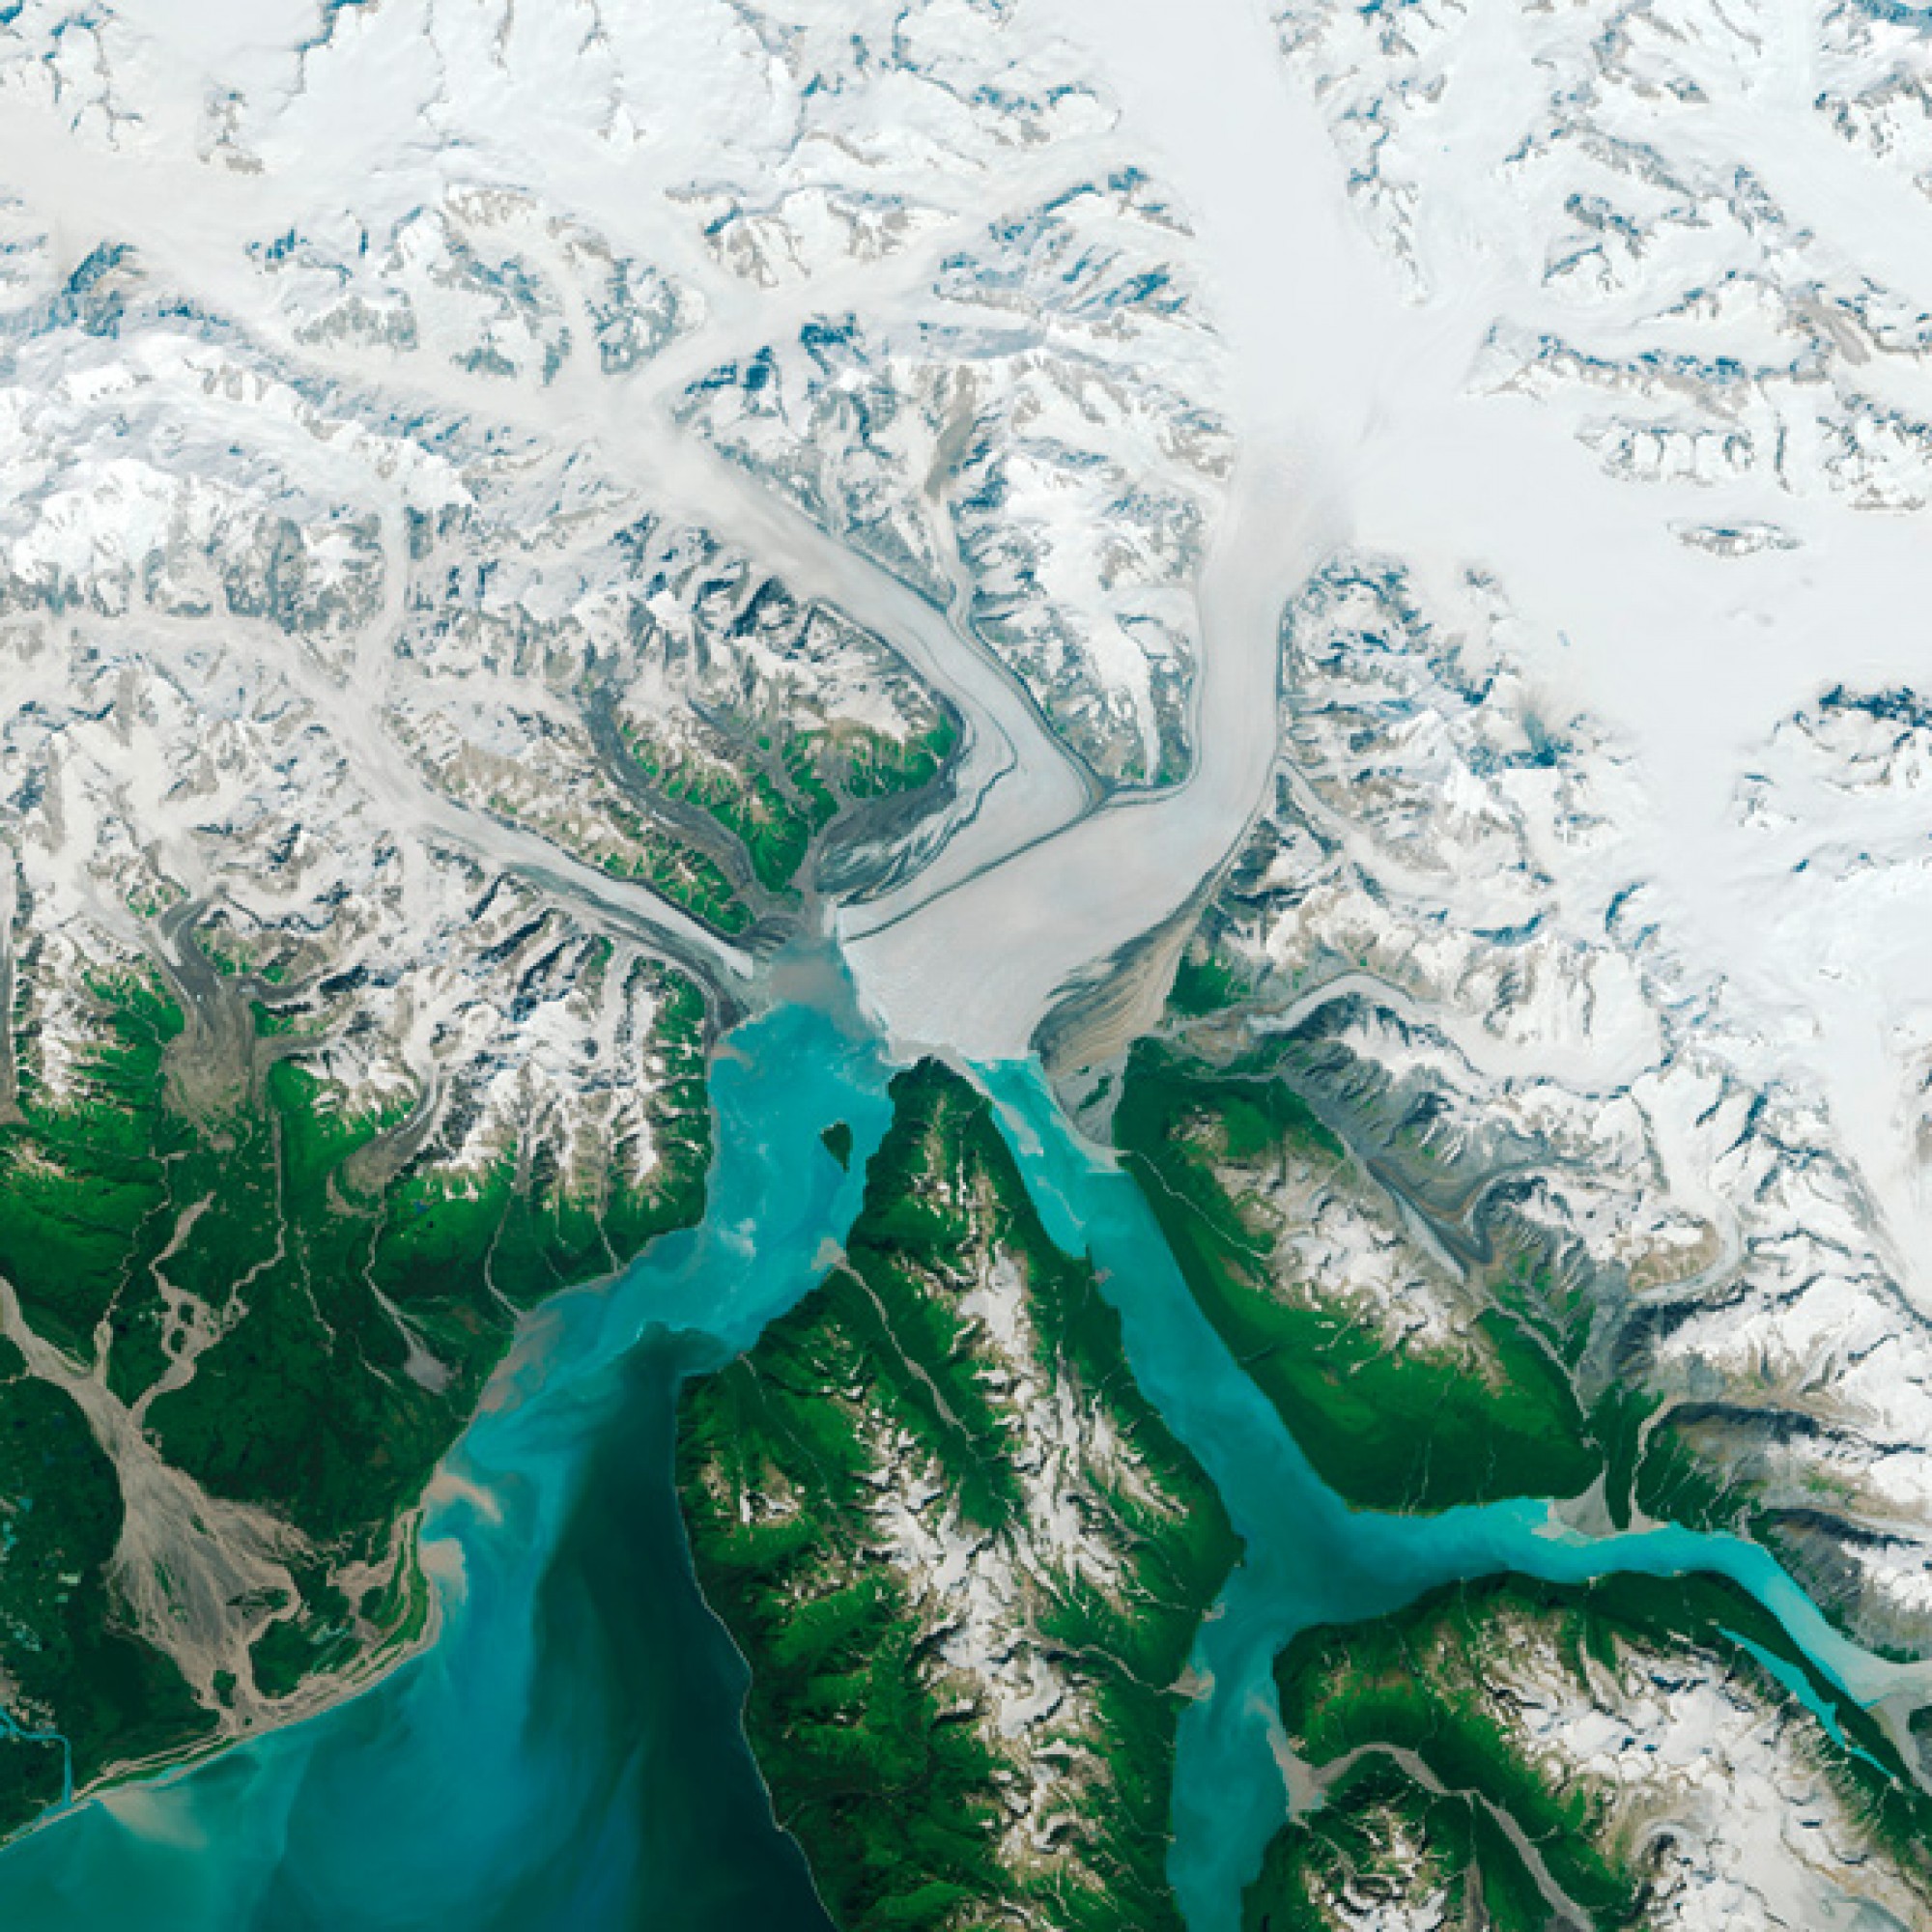 Hubbard Gletscher in Alaska. 